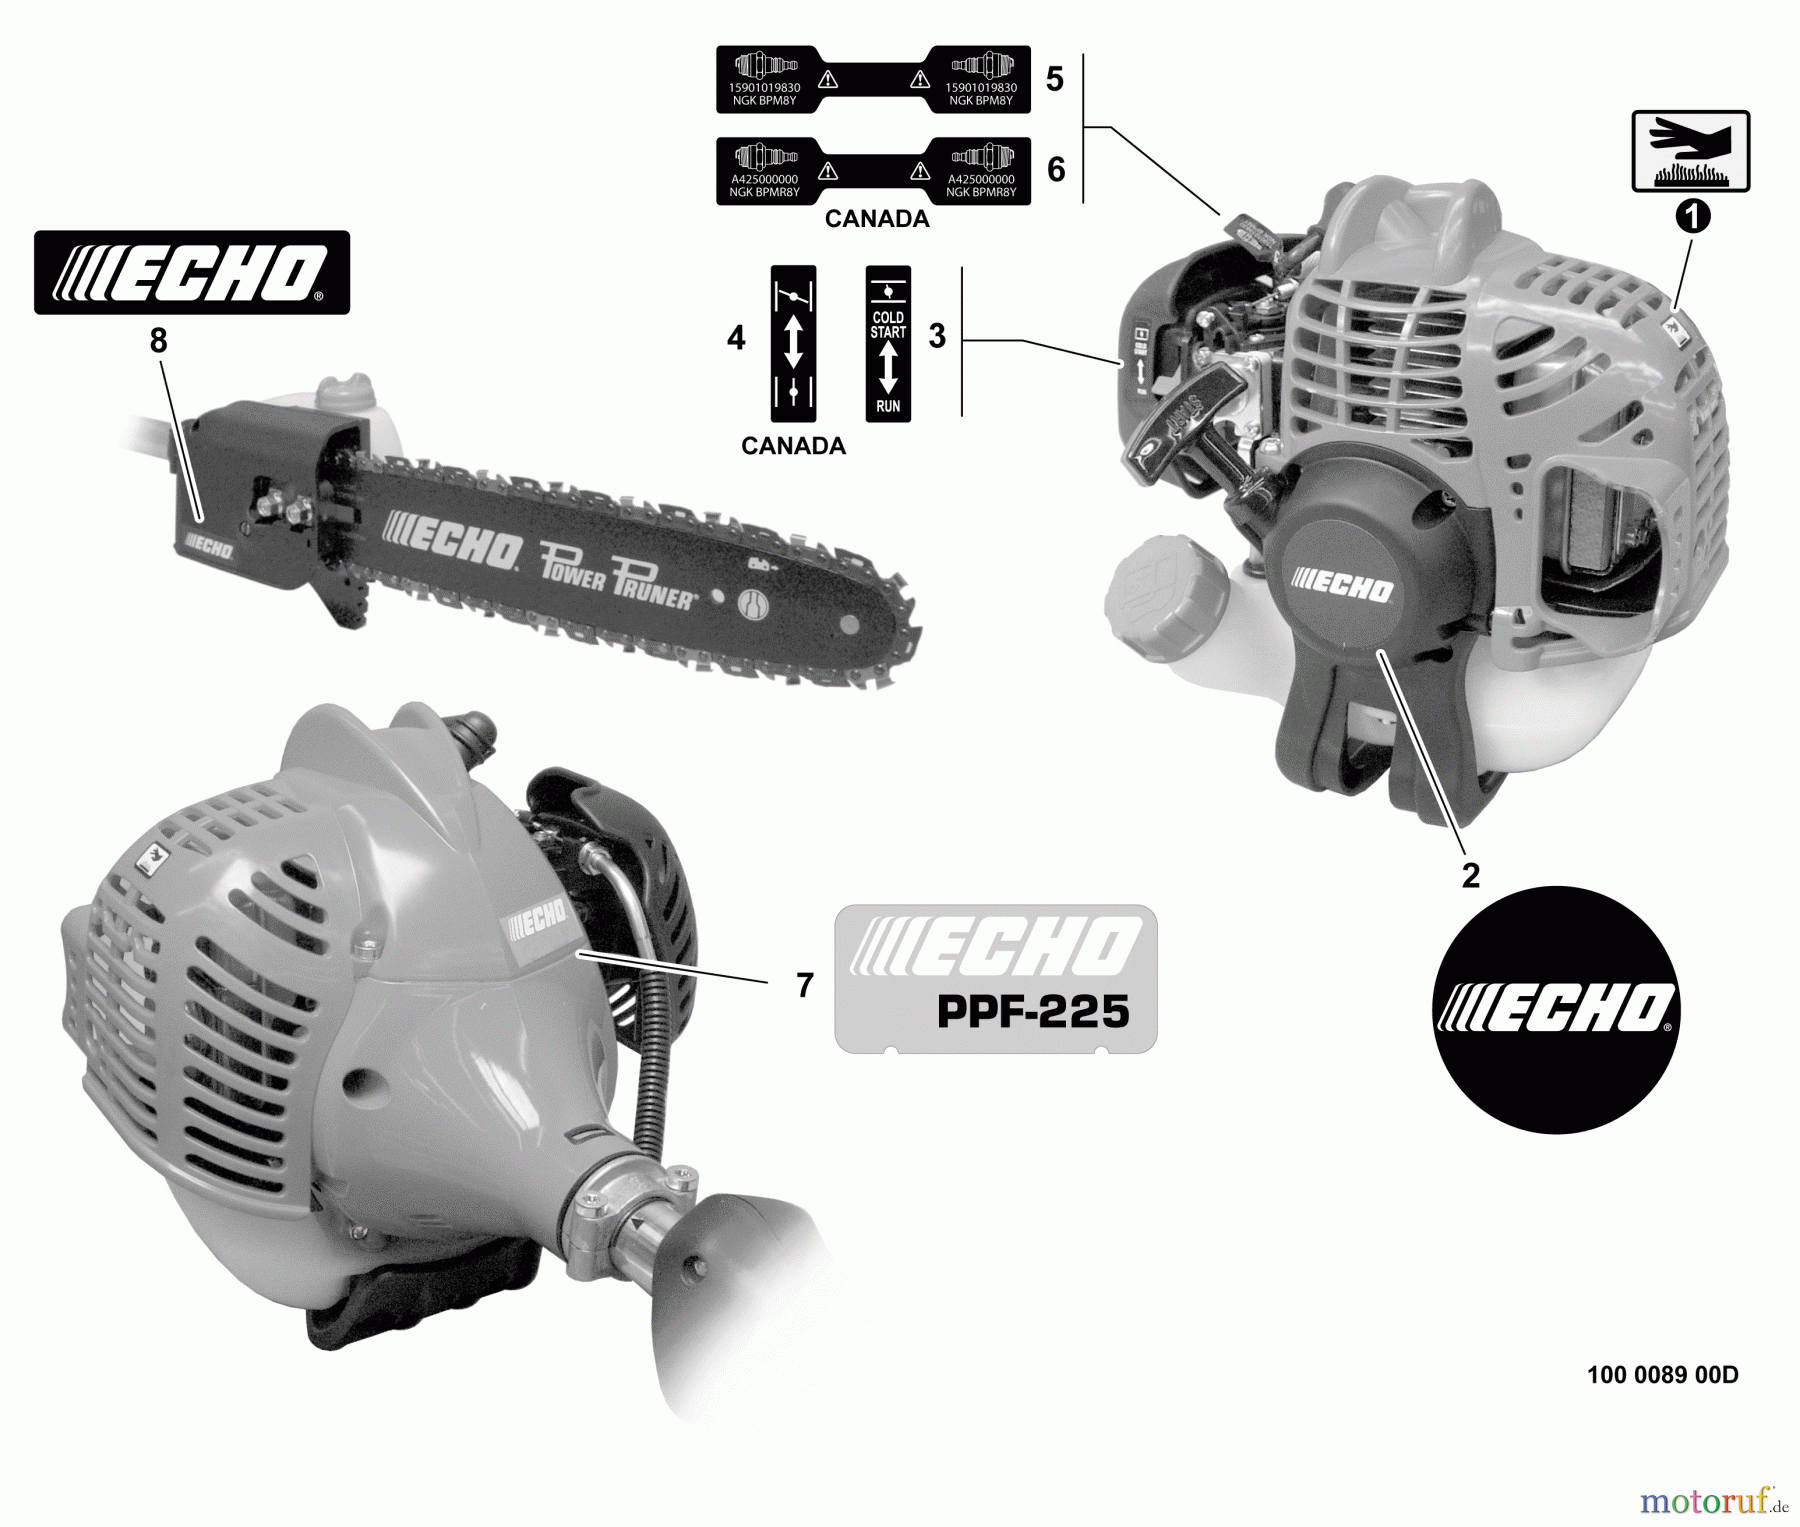  Echo Hochentaster PPF-225 - Echo Pole Saw / Pruner, S/N: S63311001001 - S63311999999 Labels